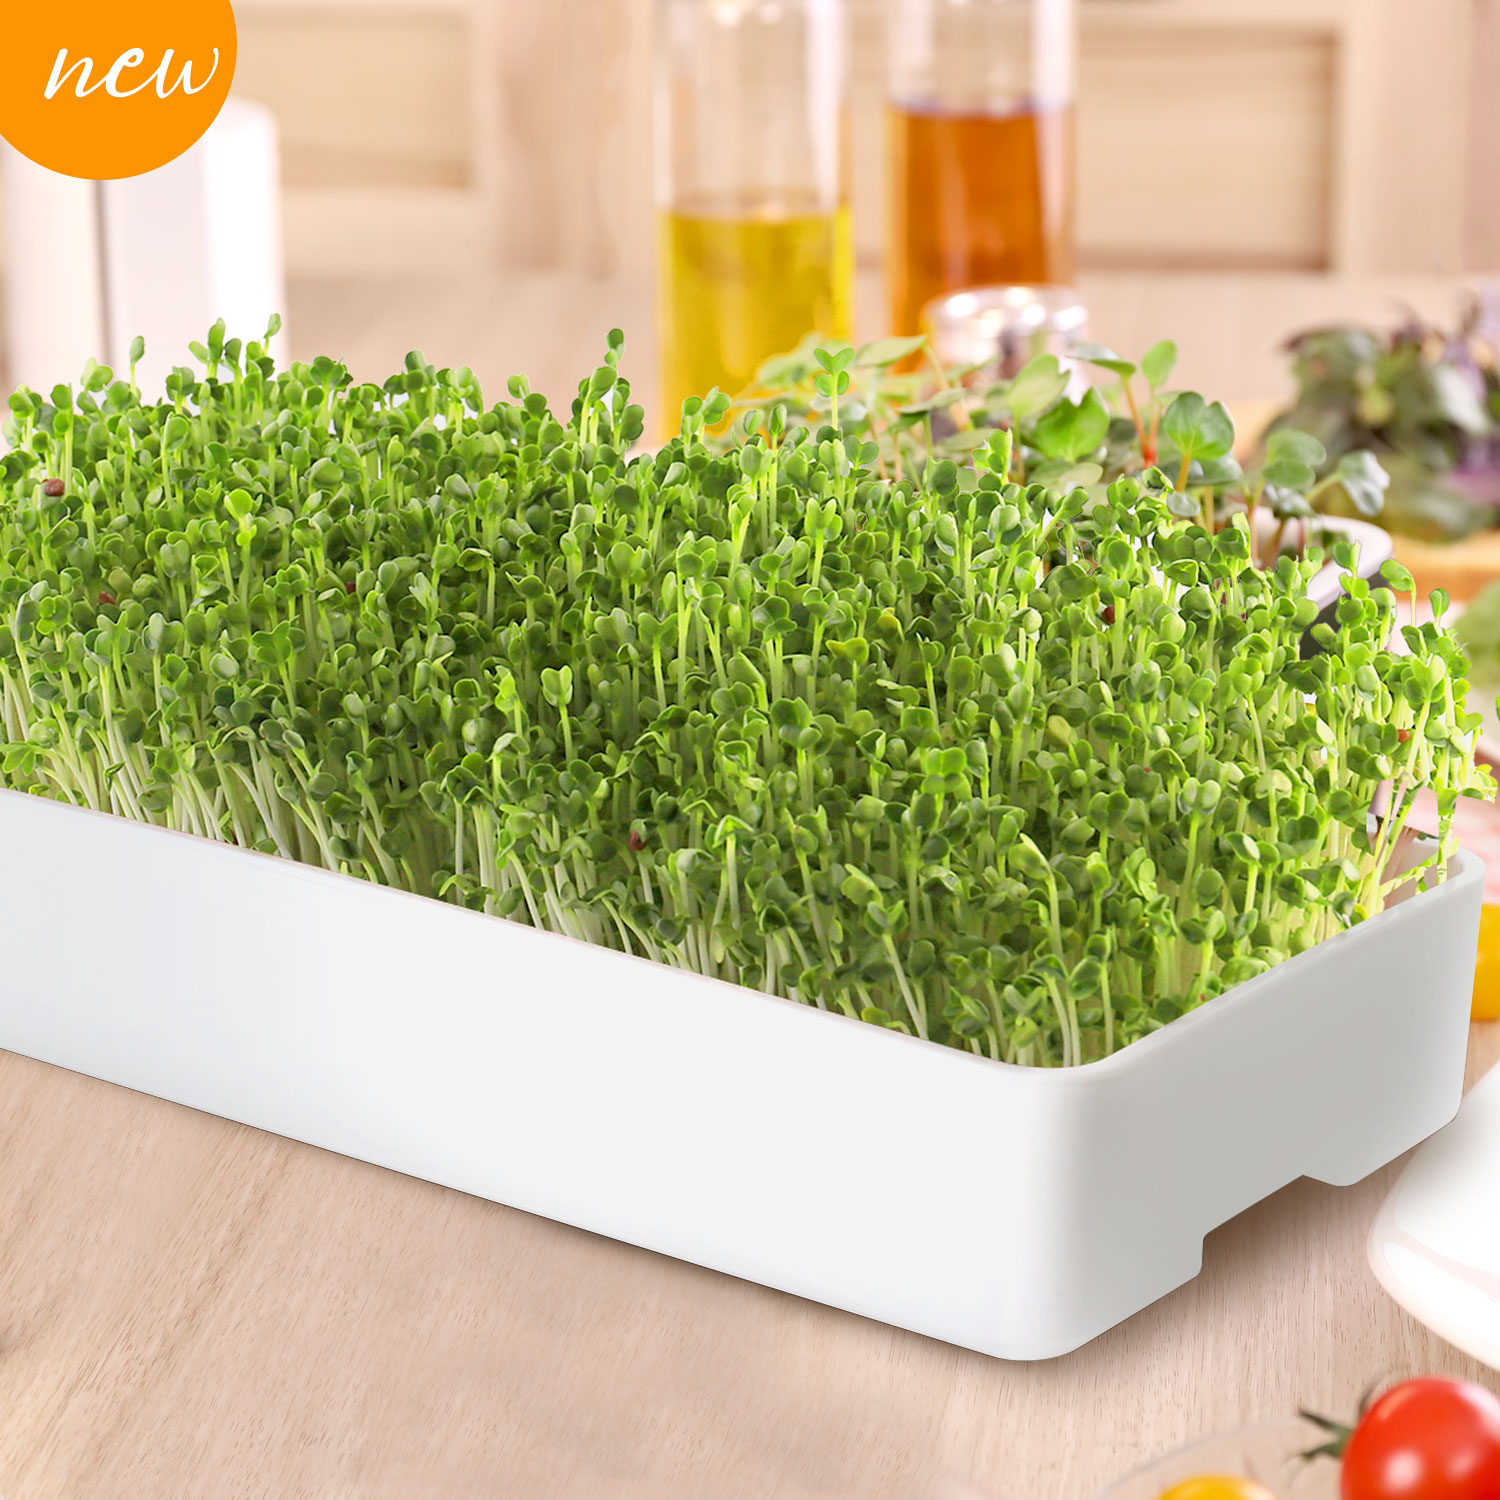 I-MG203 Hydroponic Microgreens Seed Starter Kit Indoor Smart Garden